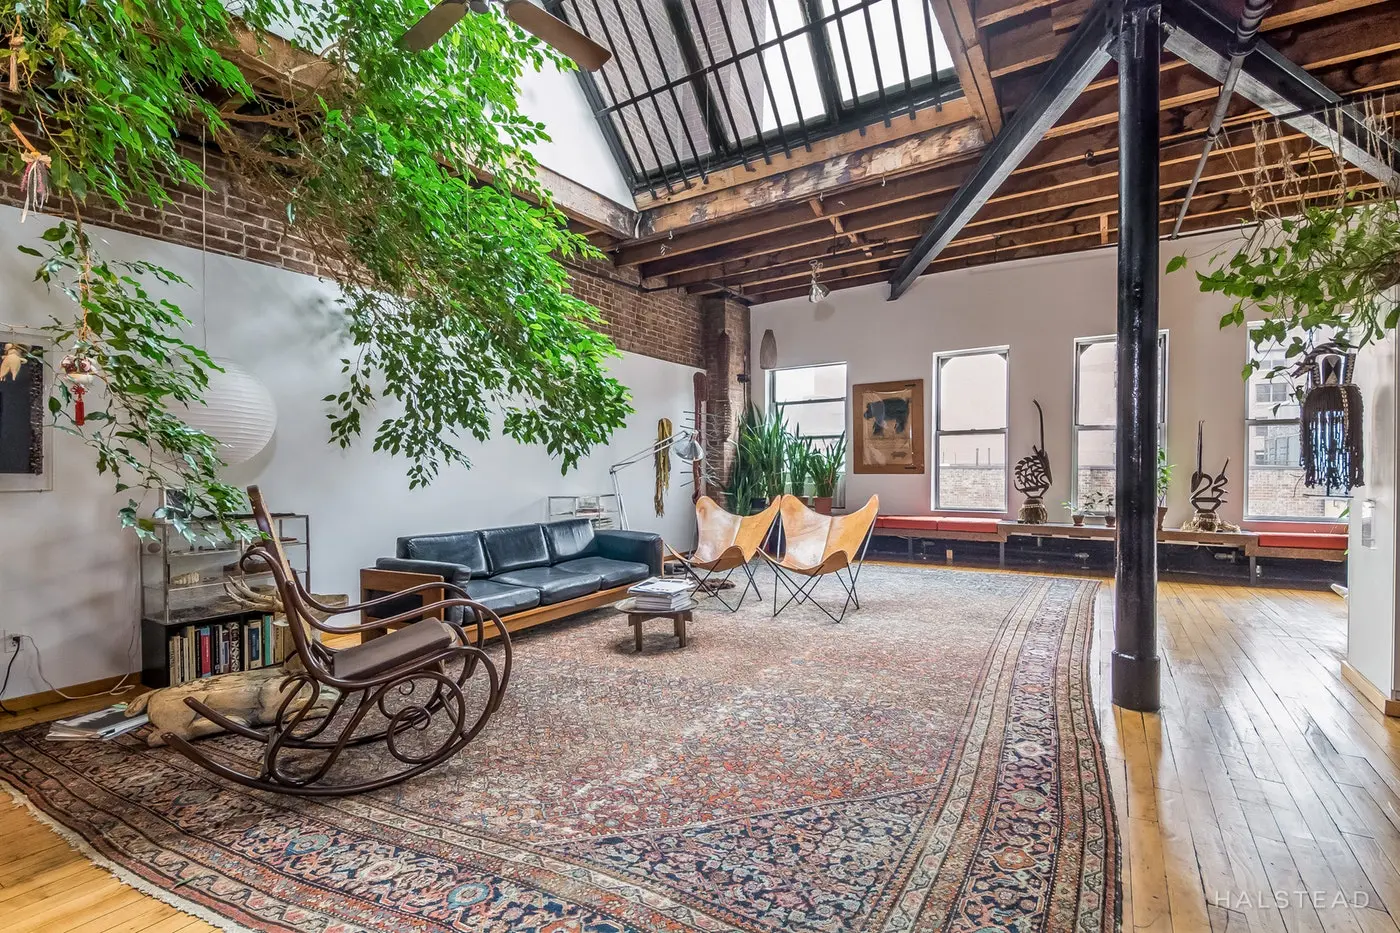 A 3,000 sq ft artist's loft in Manhattan lists for $4m